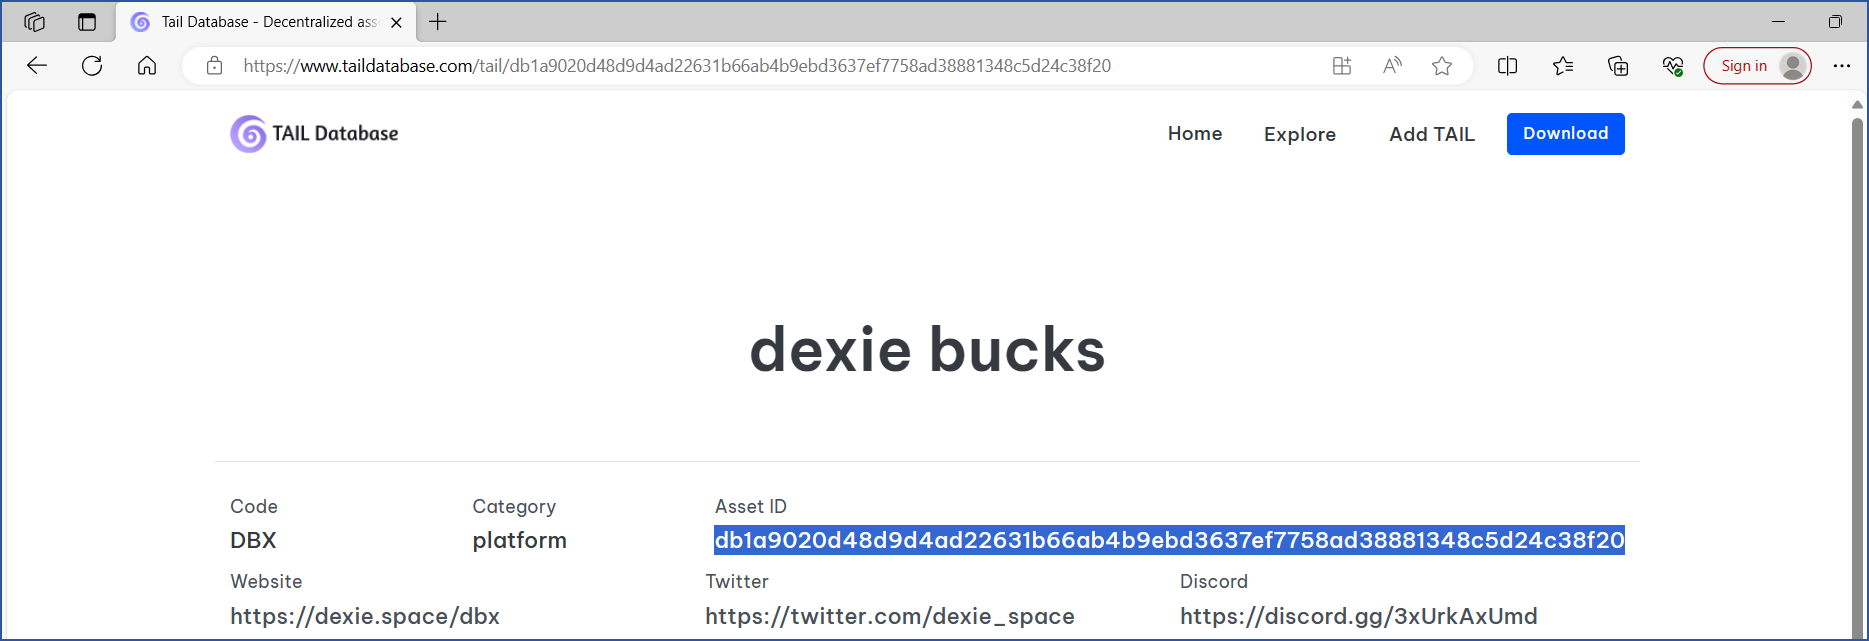 taildatabase dexie bucks asset ID